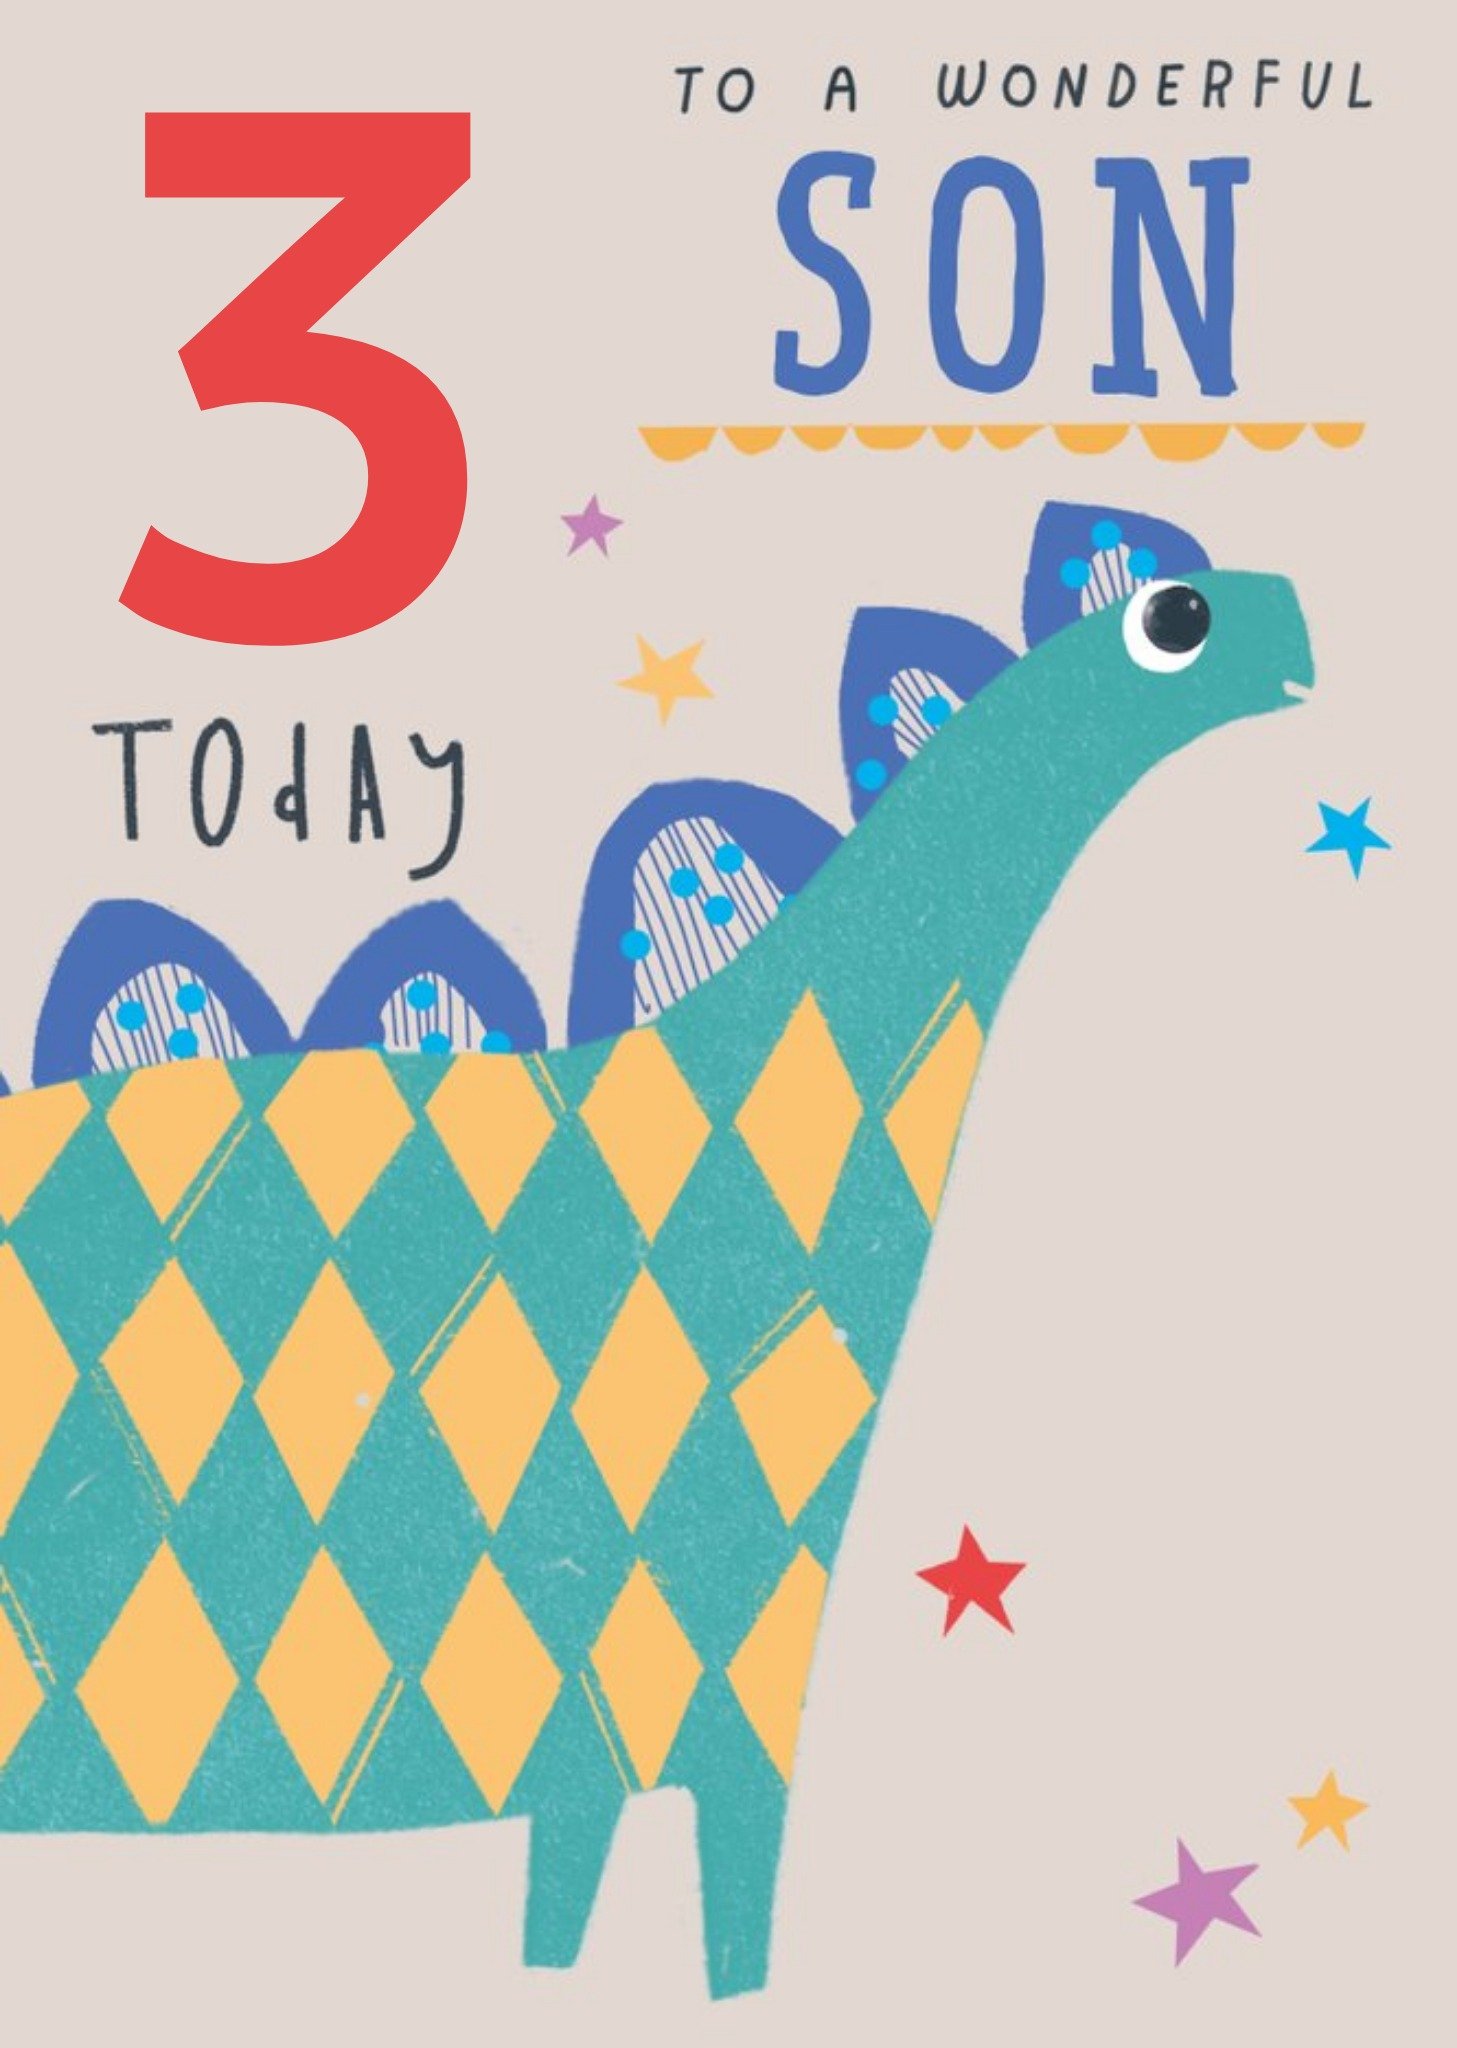 Moonpig Bright Fun Illustration Of A Dinosaur To A Wonderful Son 3rd Birthday Card, Large